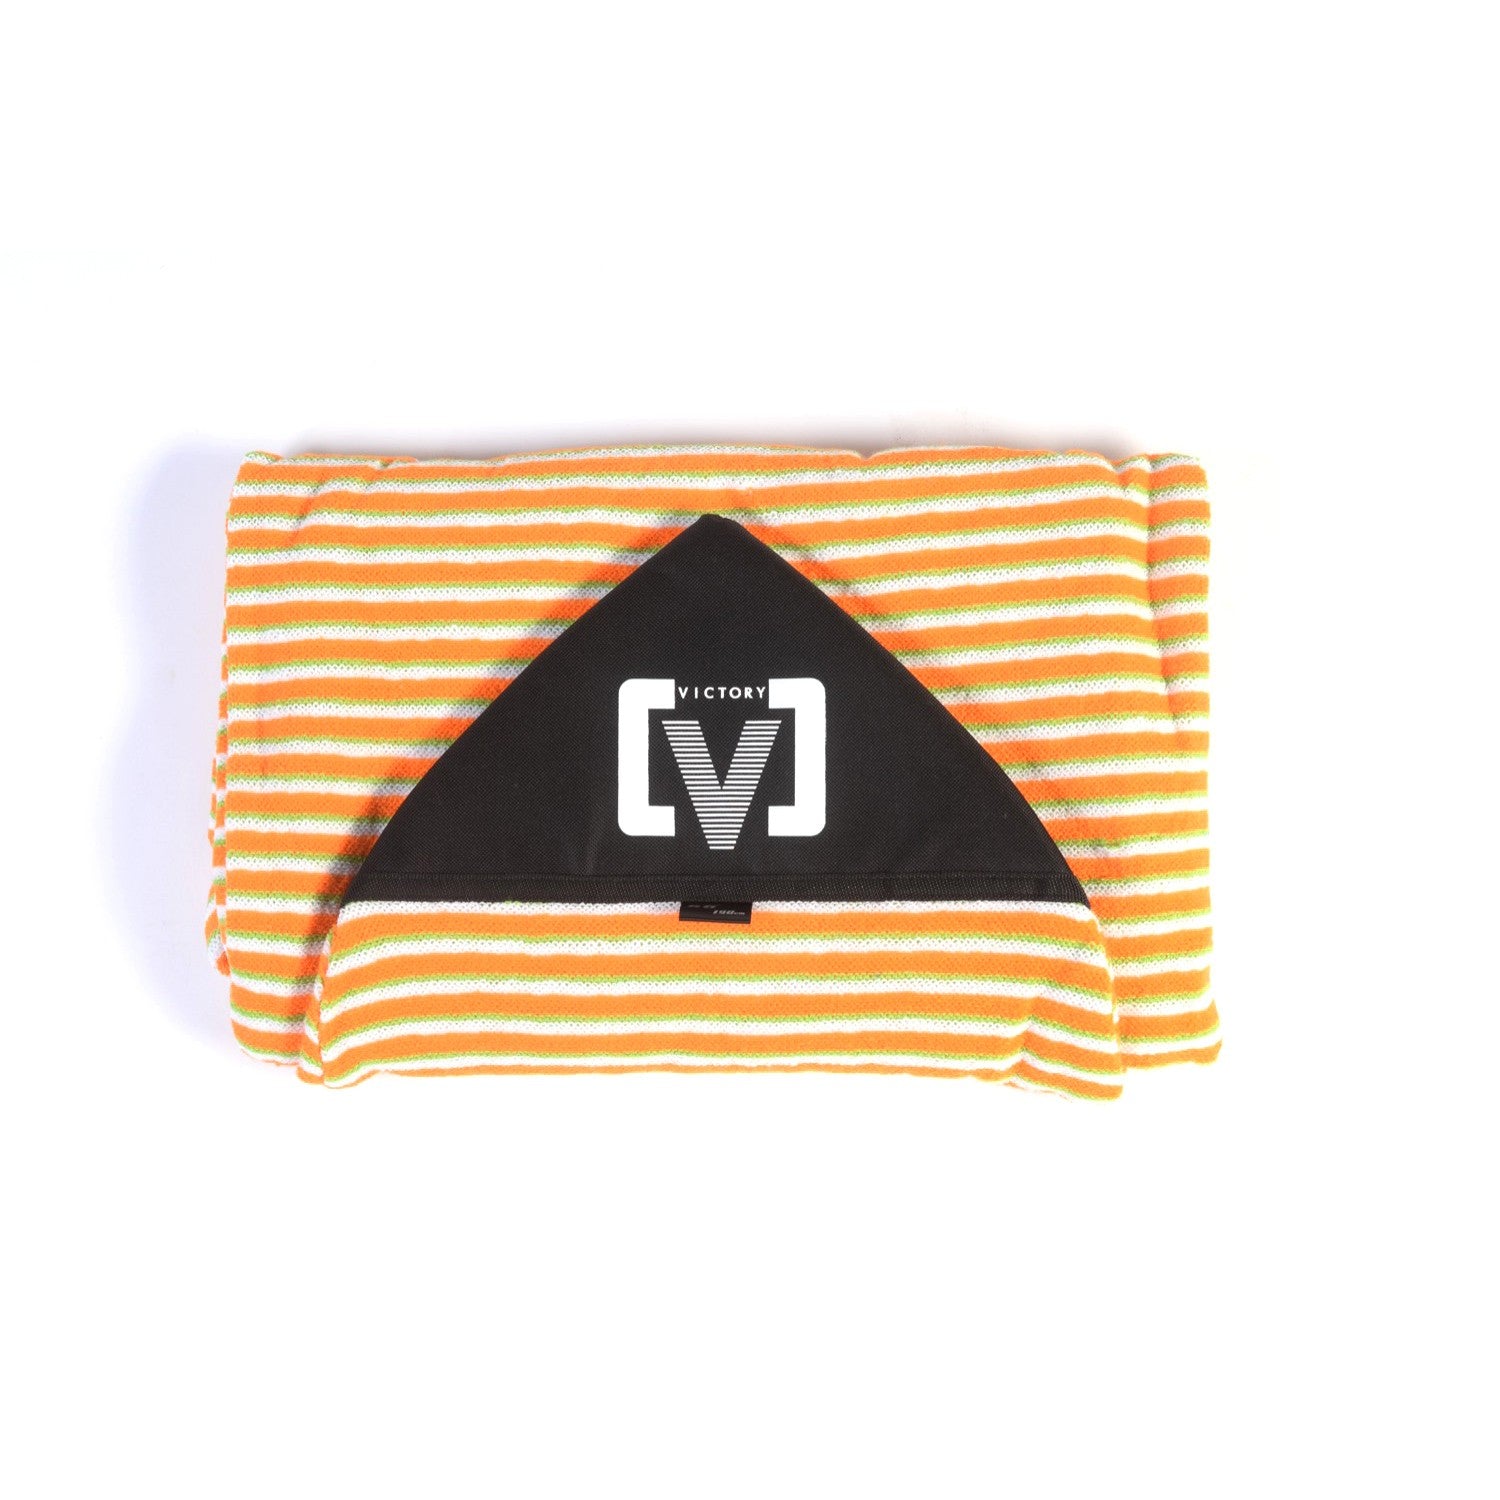 VICTORY - Surf sock cover - Retro / Fish / Hybrid - 5'10 - Orange / Green